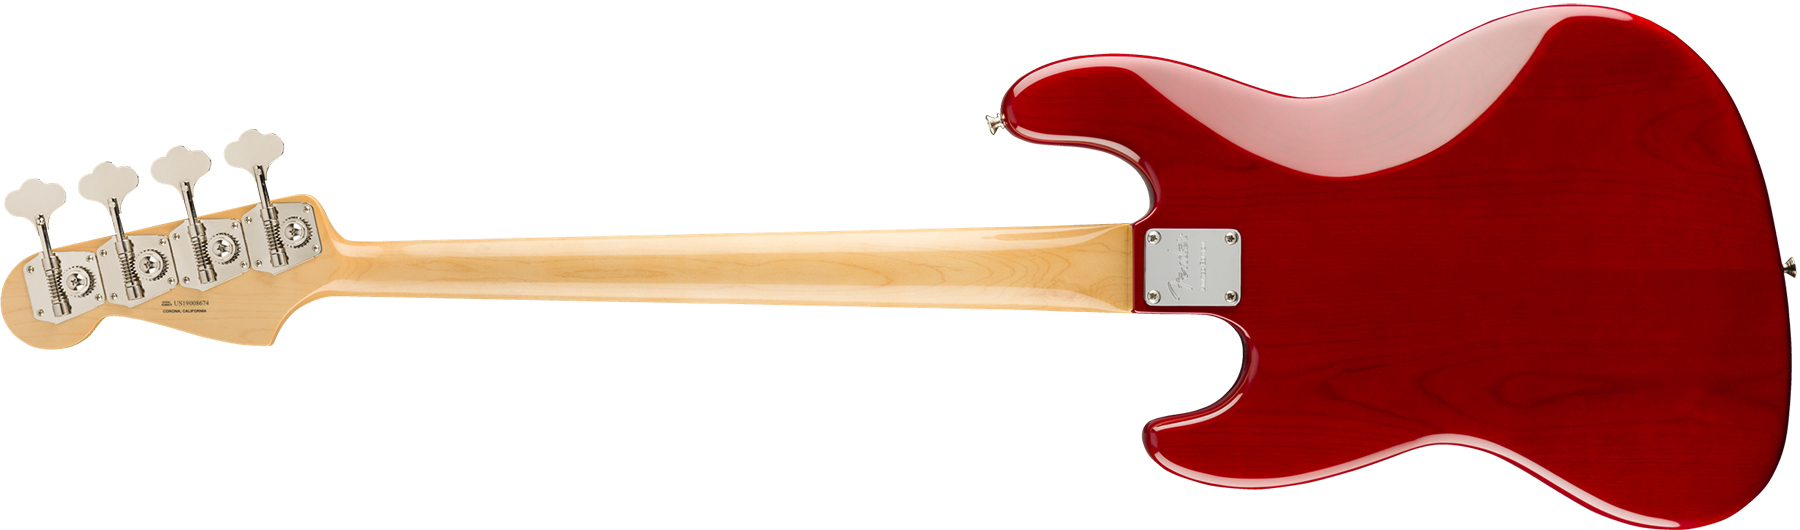 Fender Jazz Bass Flame Ash Top Rarities Usa Eb - Plasma Red Burst - Bajo eléctrico de cuerpo sólido - Variation 1